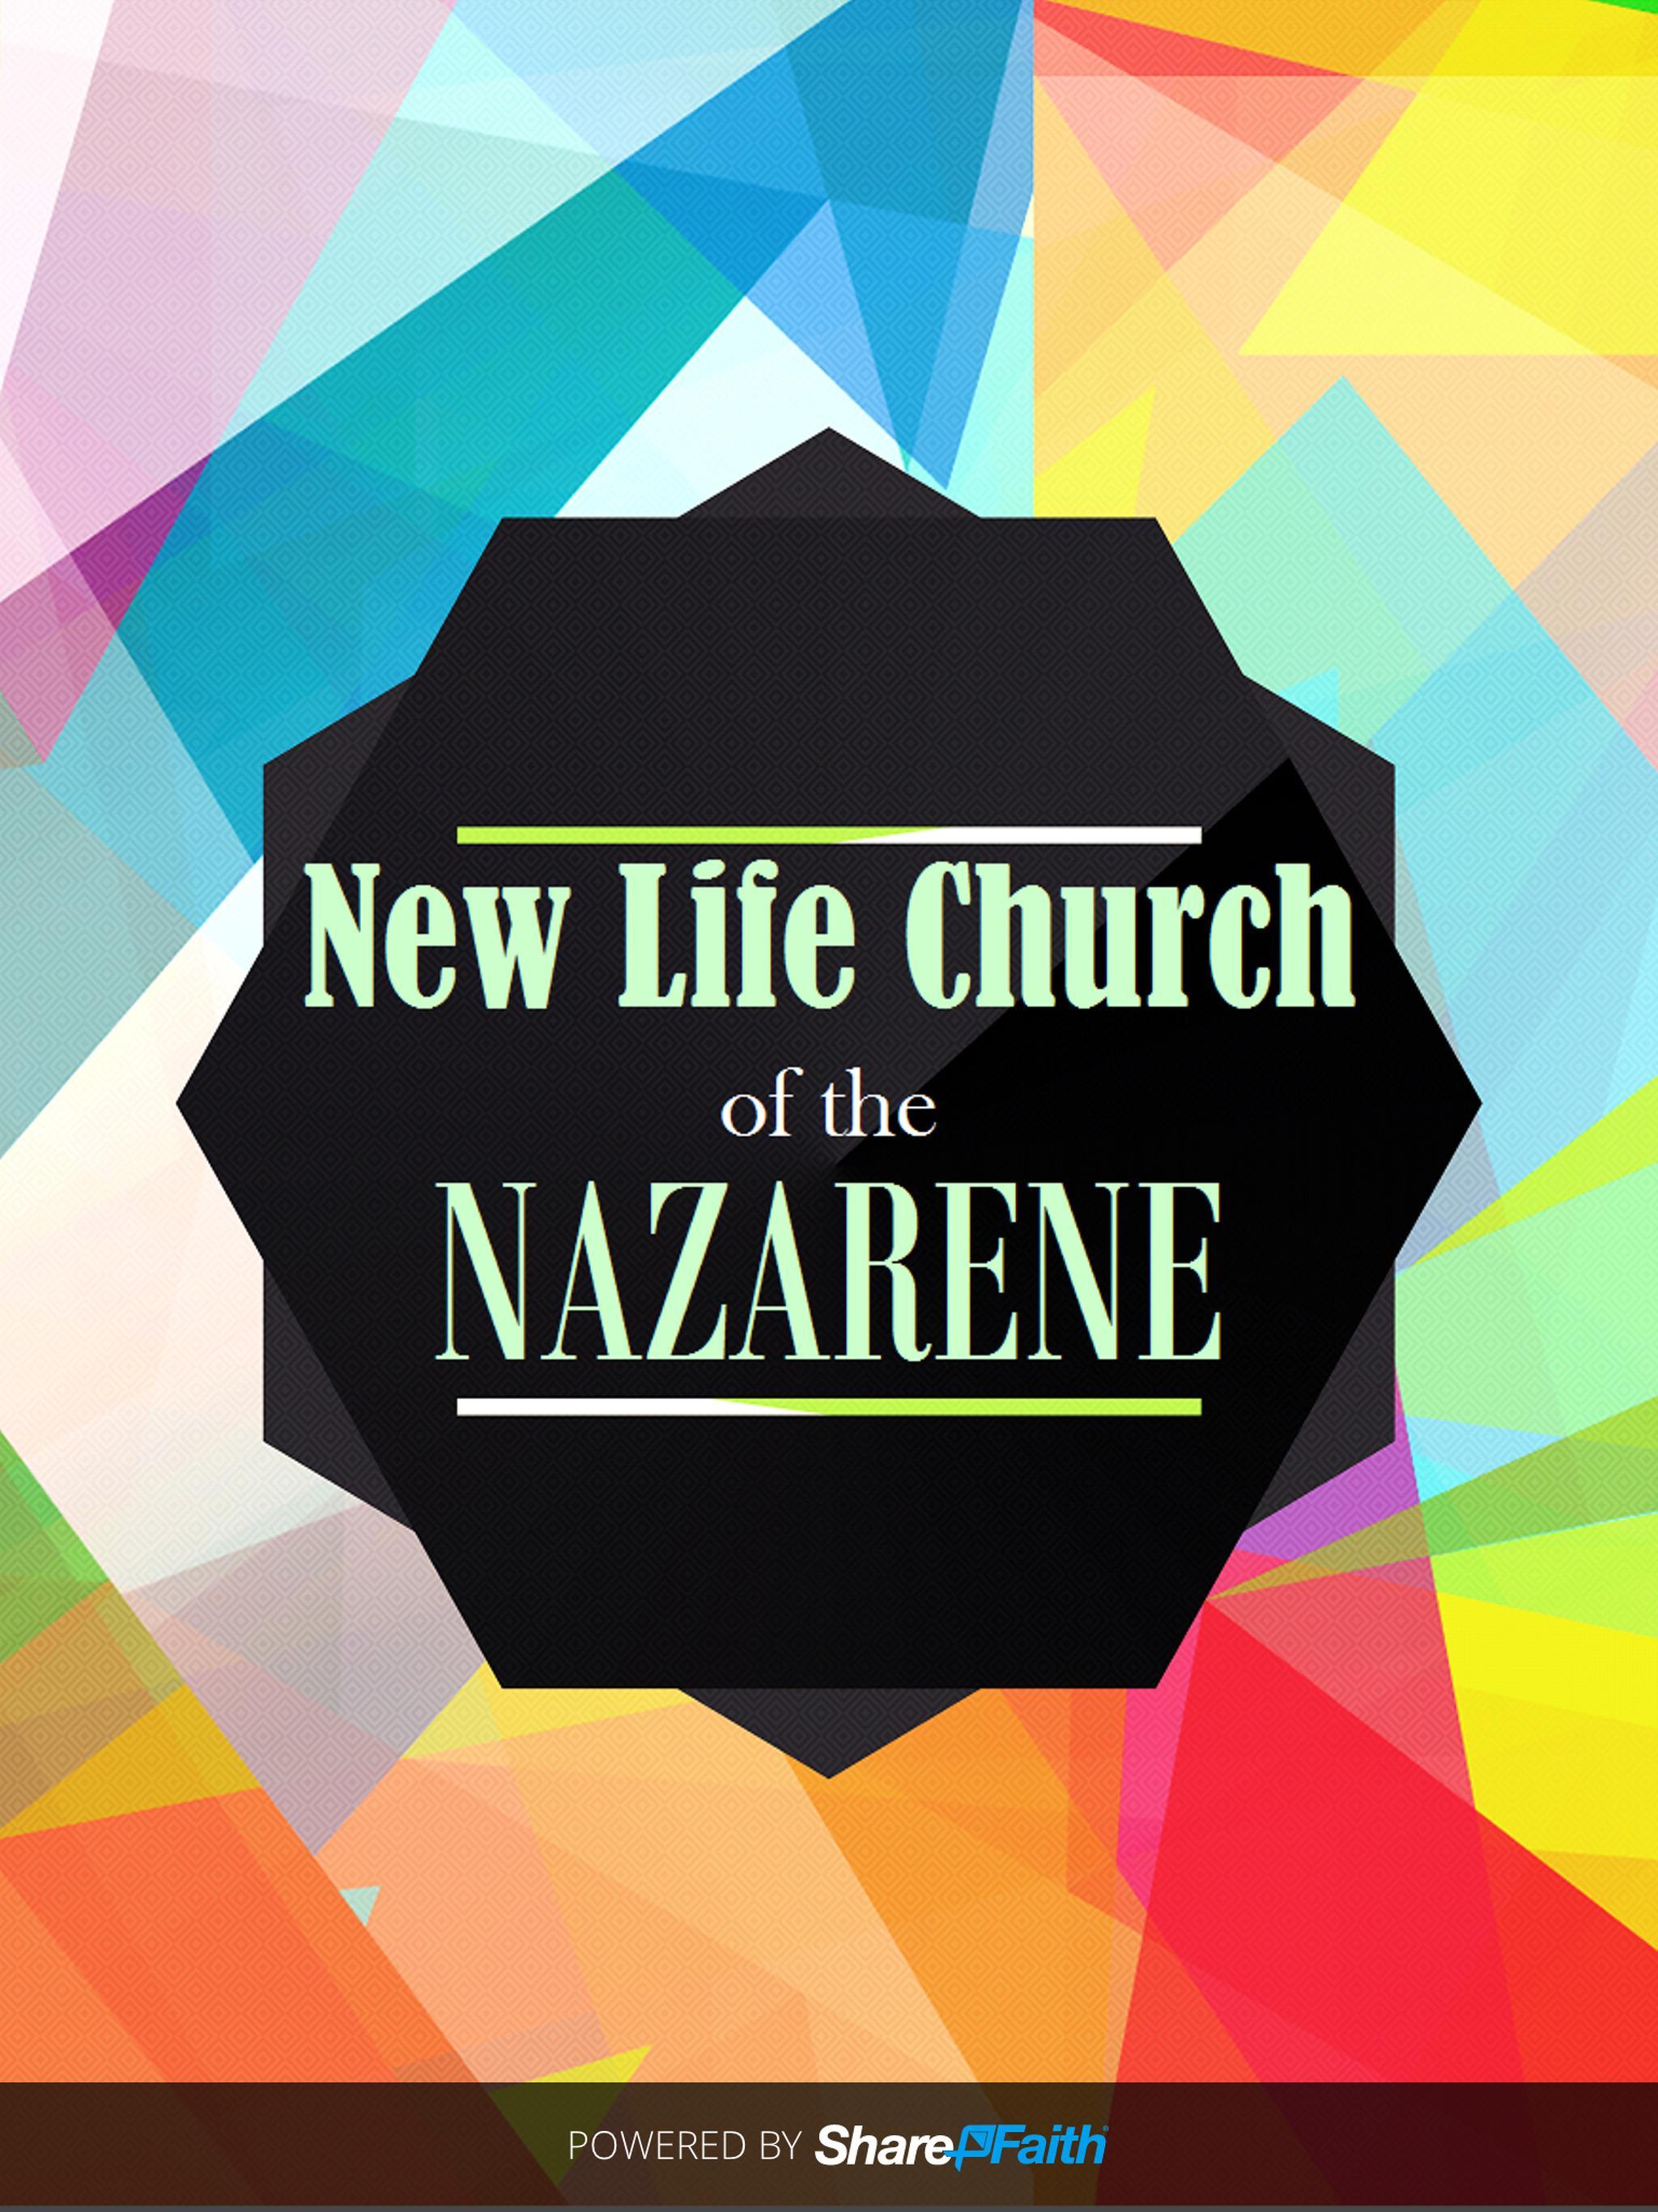 New life на русском. New Life Church. The New Life. New Life компания. New Life description.